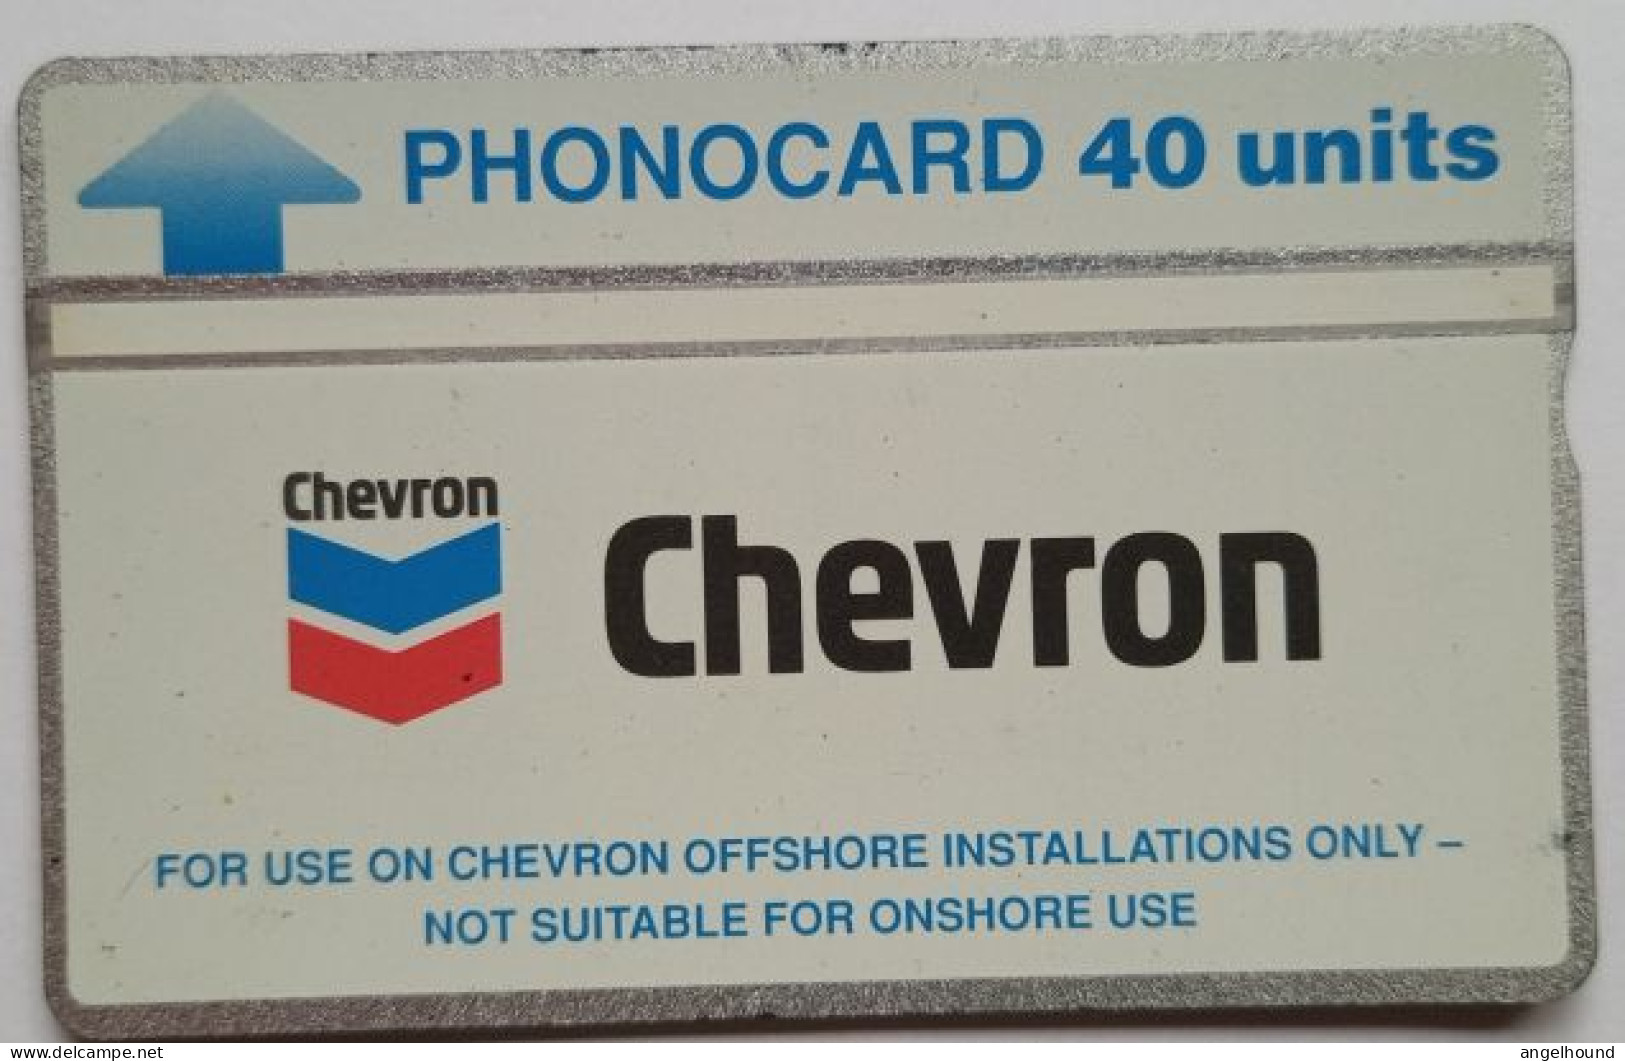 Chevron 40 Units 306C - [ 2] Plataformas Petroleras